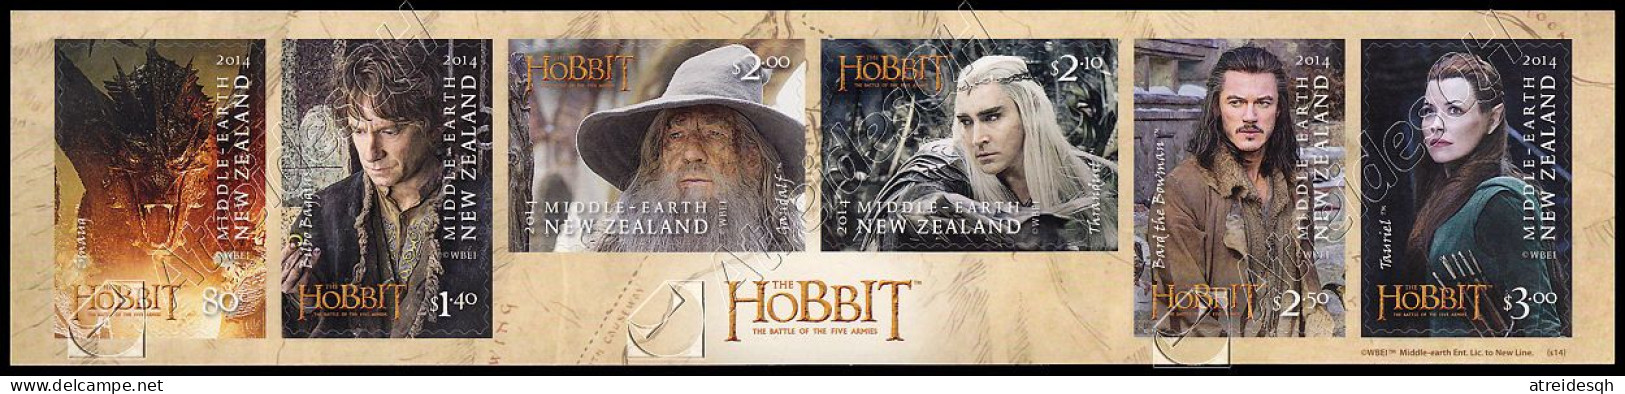 [Q] Nuova Zelanda / New Zealand 2014: Serie Lo Hobbit III Autoadesiva / The Hobbit III Self-adhesive Stamp Set ** - Cinéma